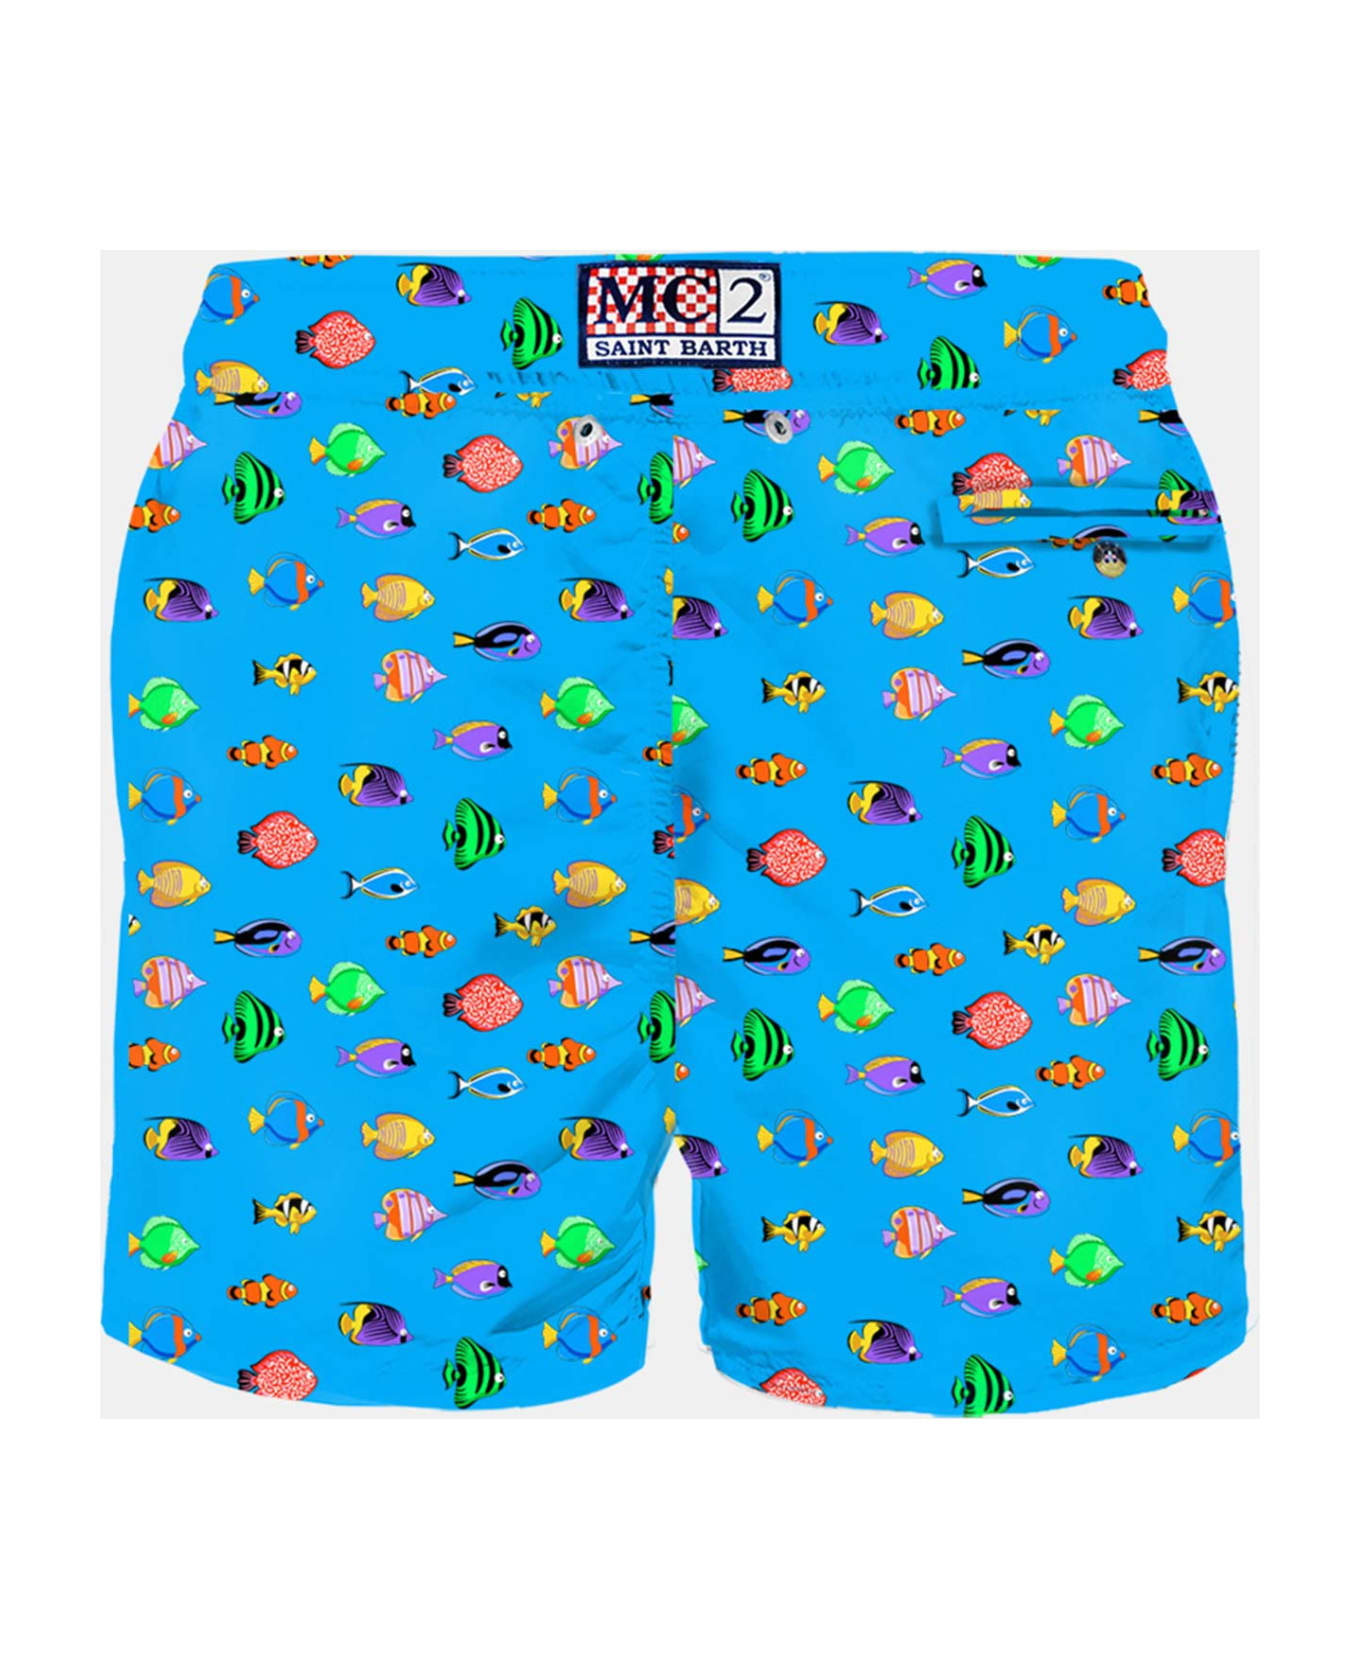 MC2 Saint Barth Man Light Fabric Swim Shorts With Fish Print - SKY